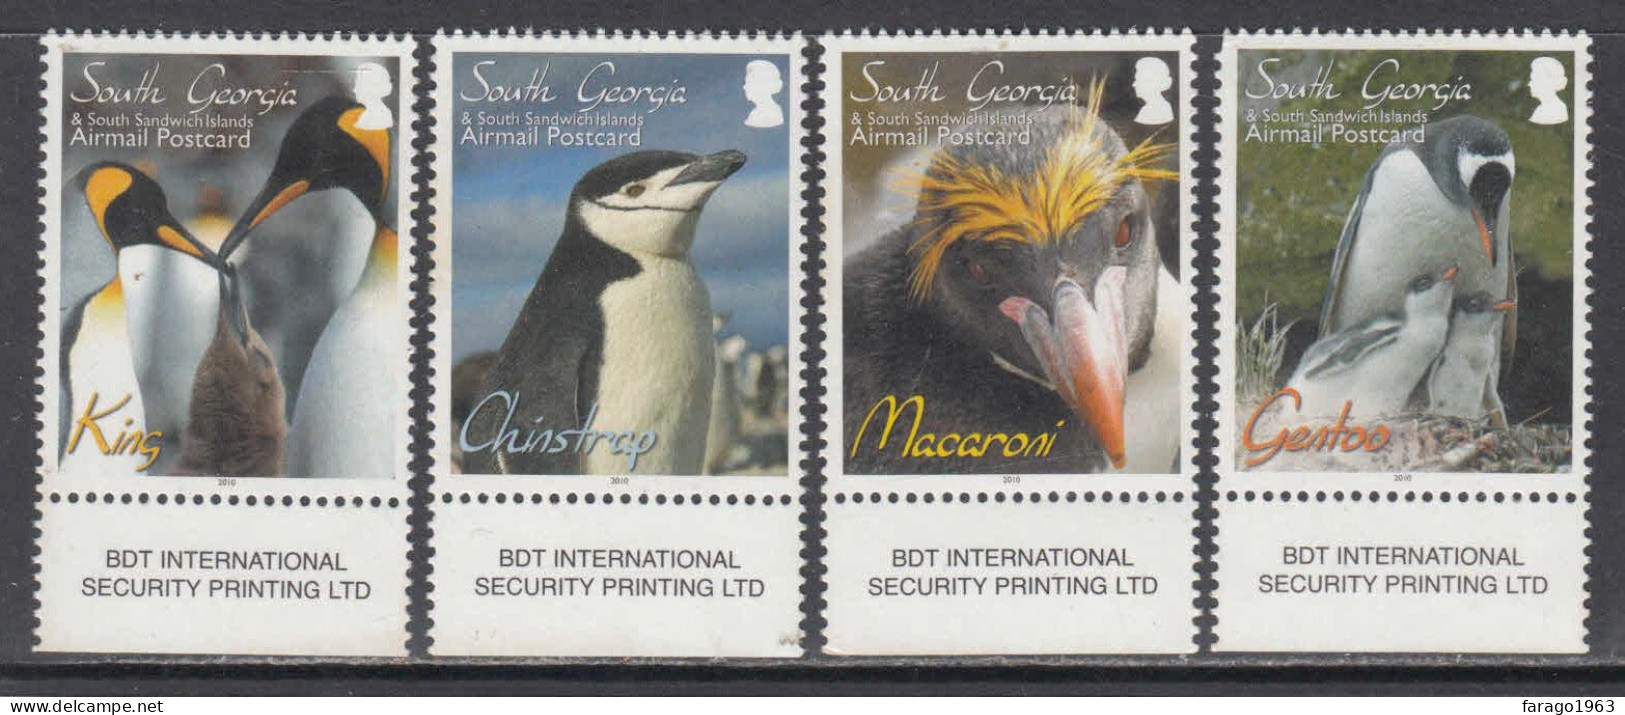 2010 South Georgia Penguins Airmail Complete Set Of 4 MNH - South Georgia